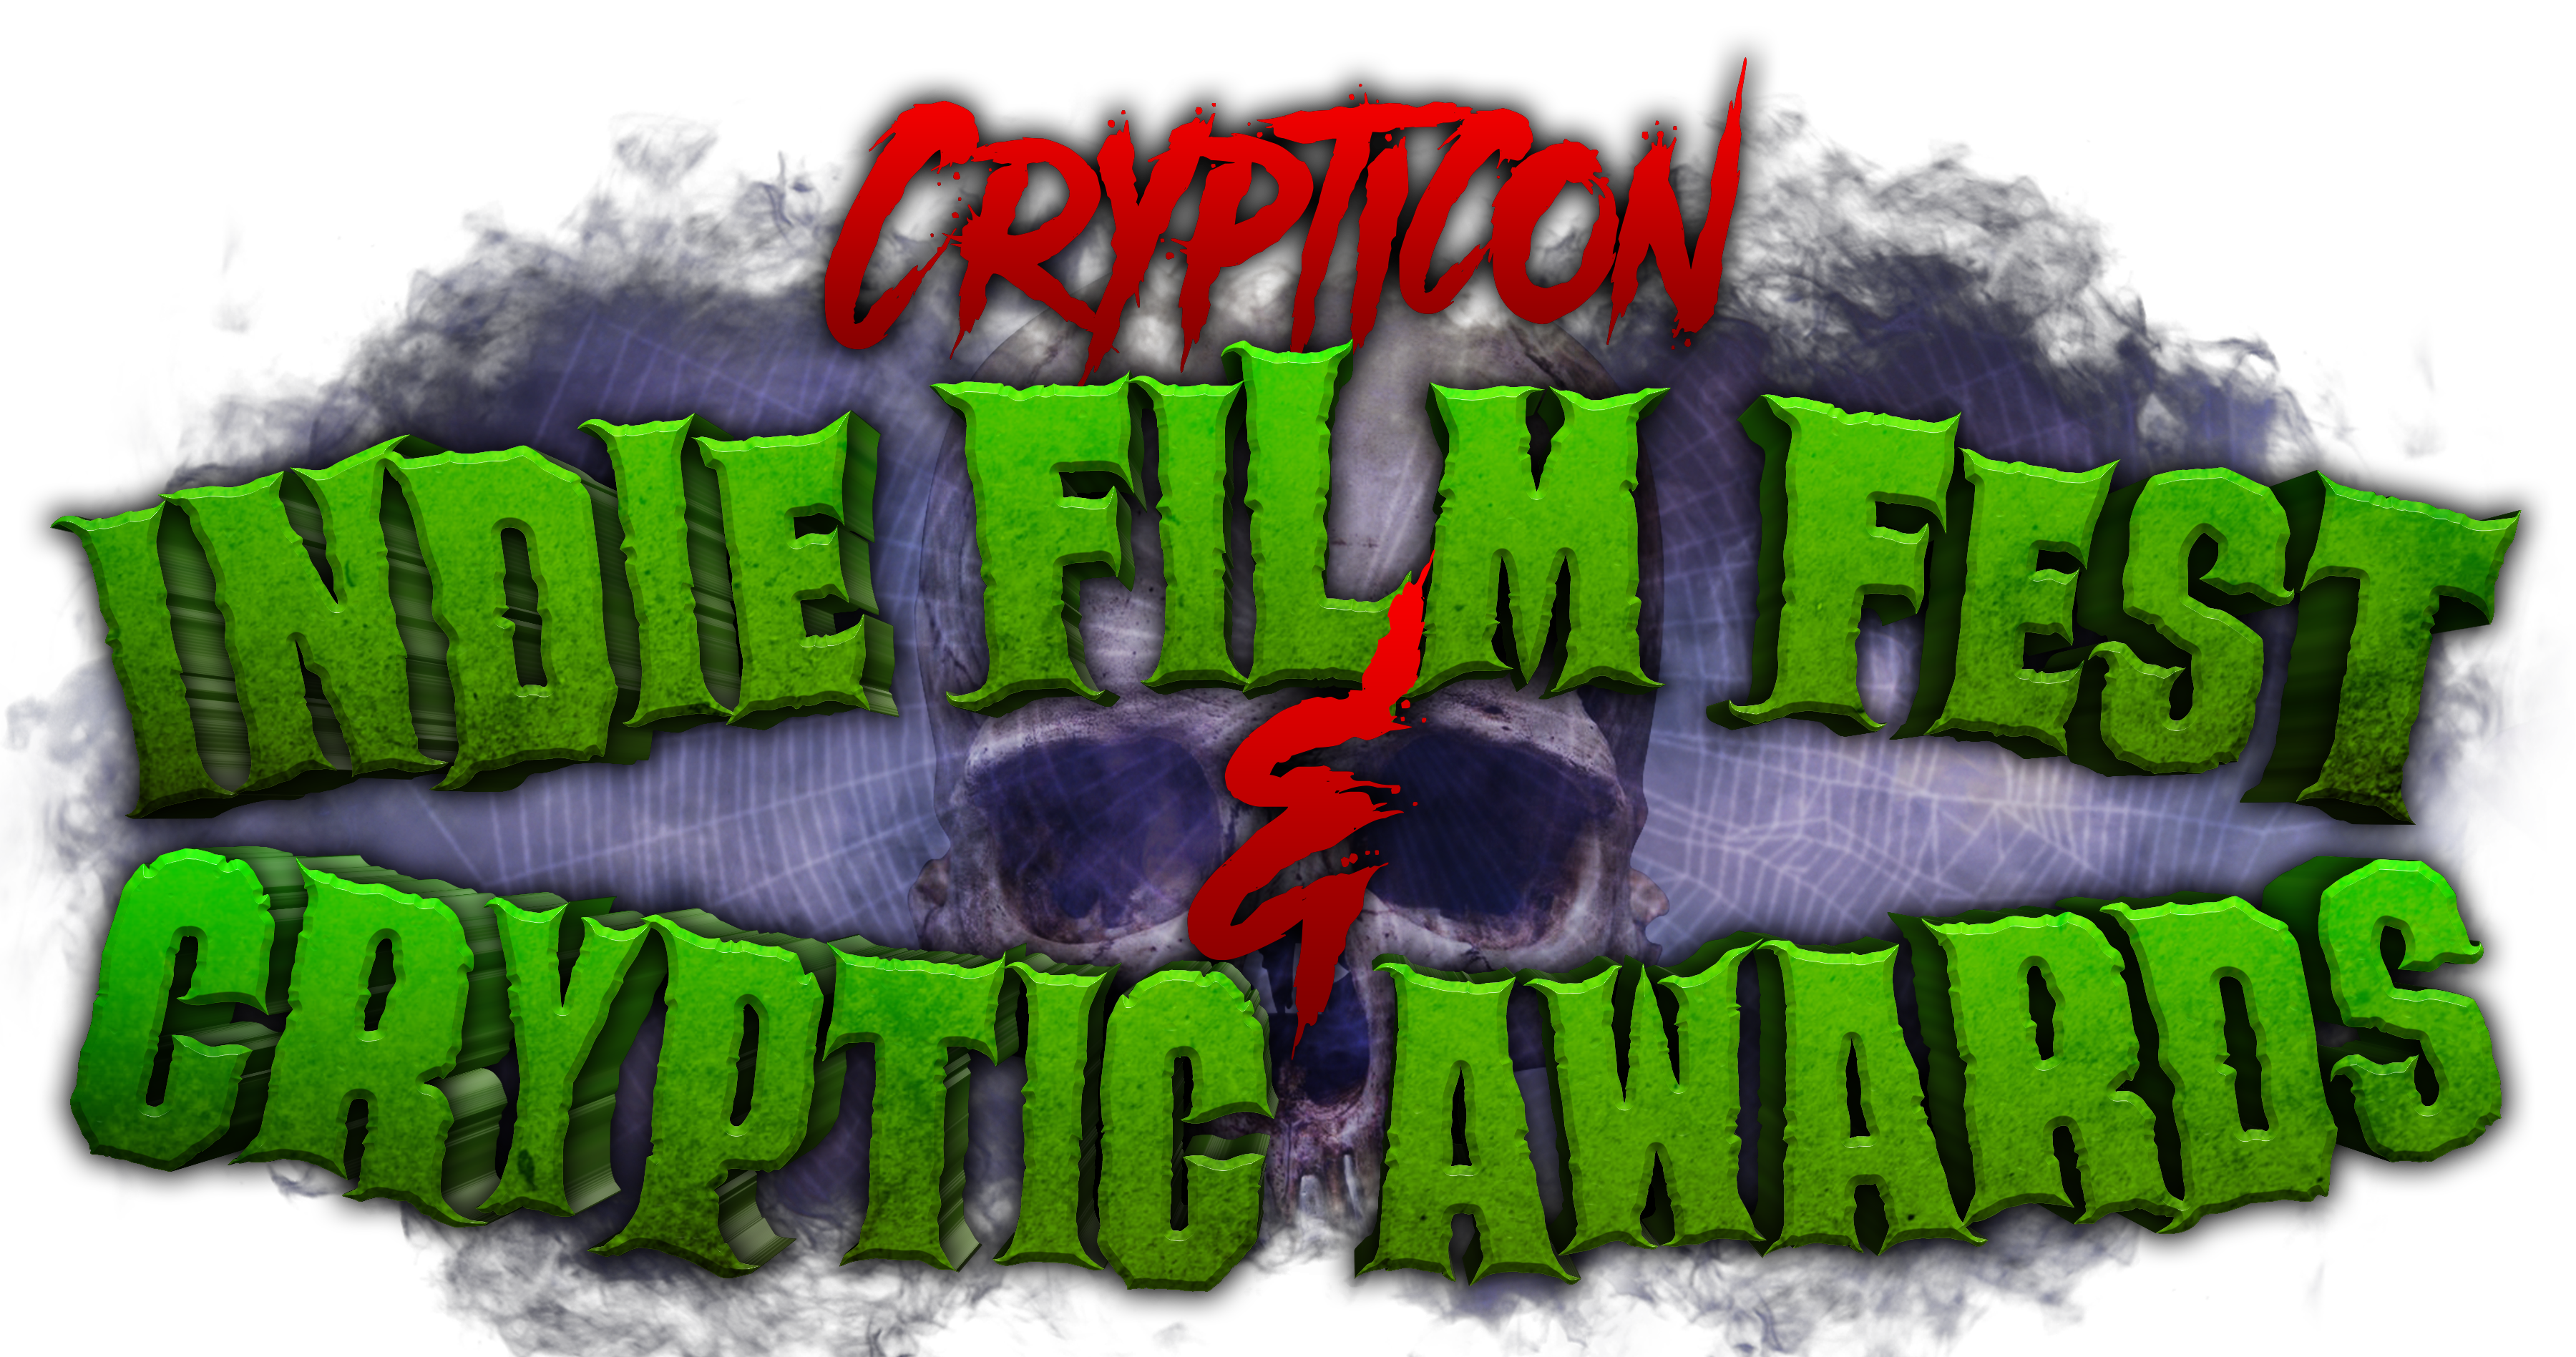 Crypticon Film Fest & Cryptic Awards